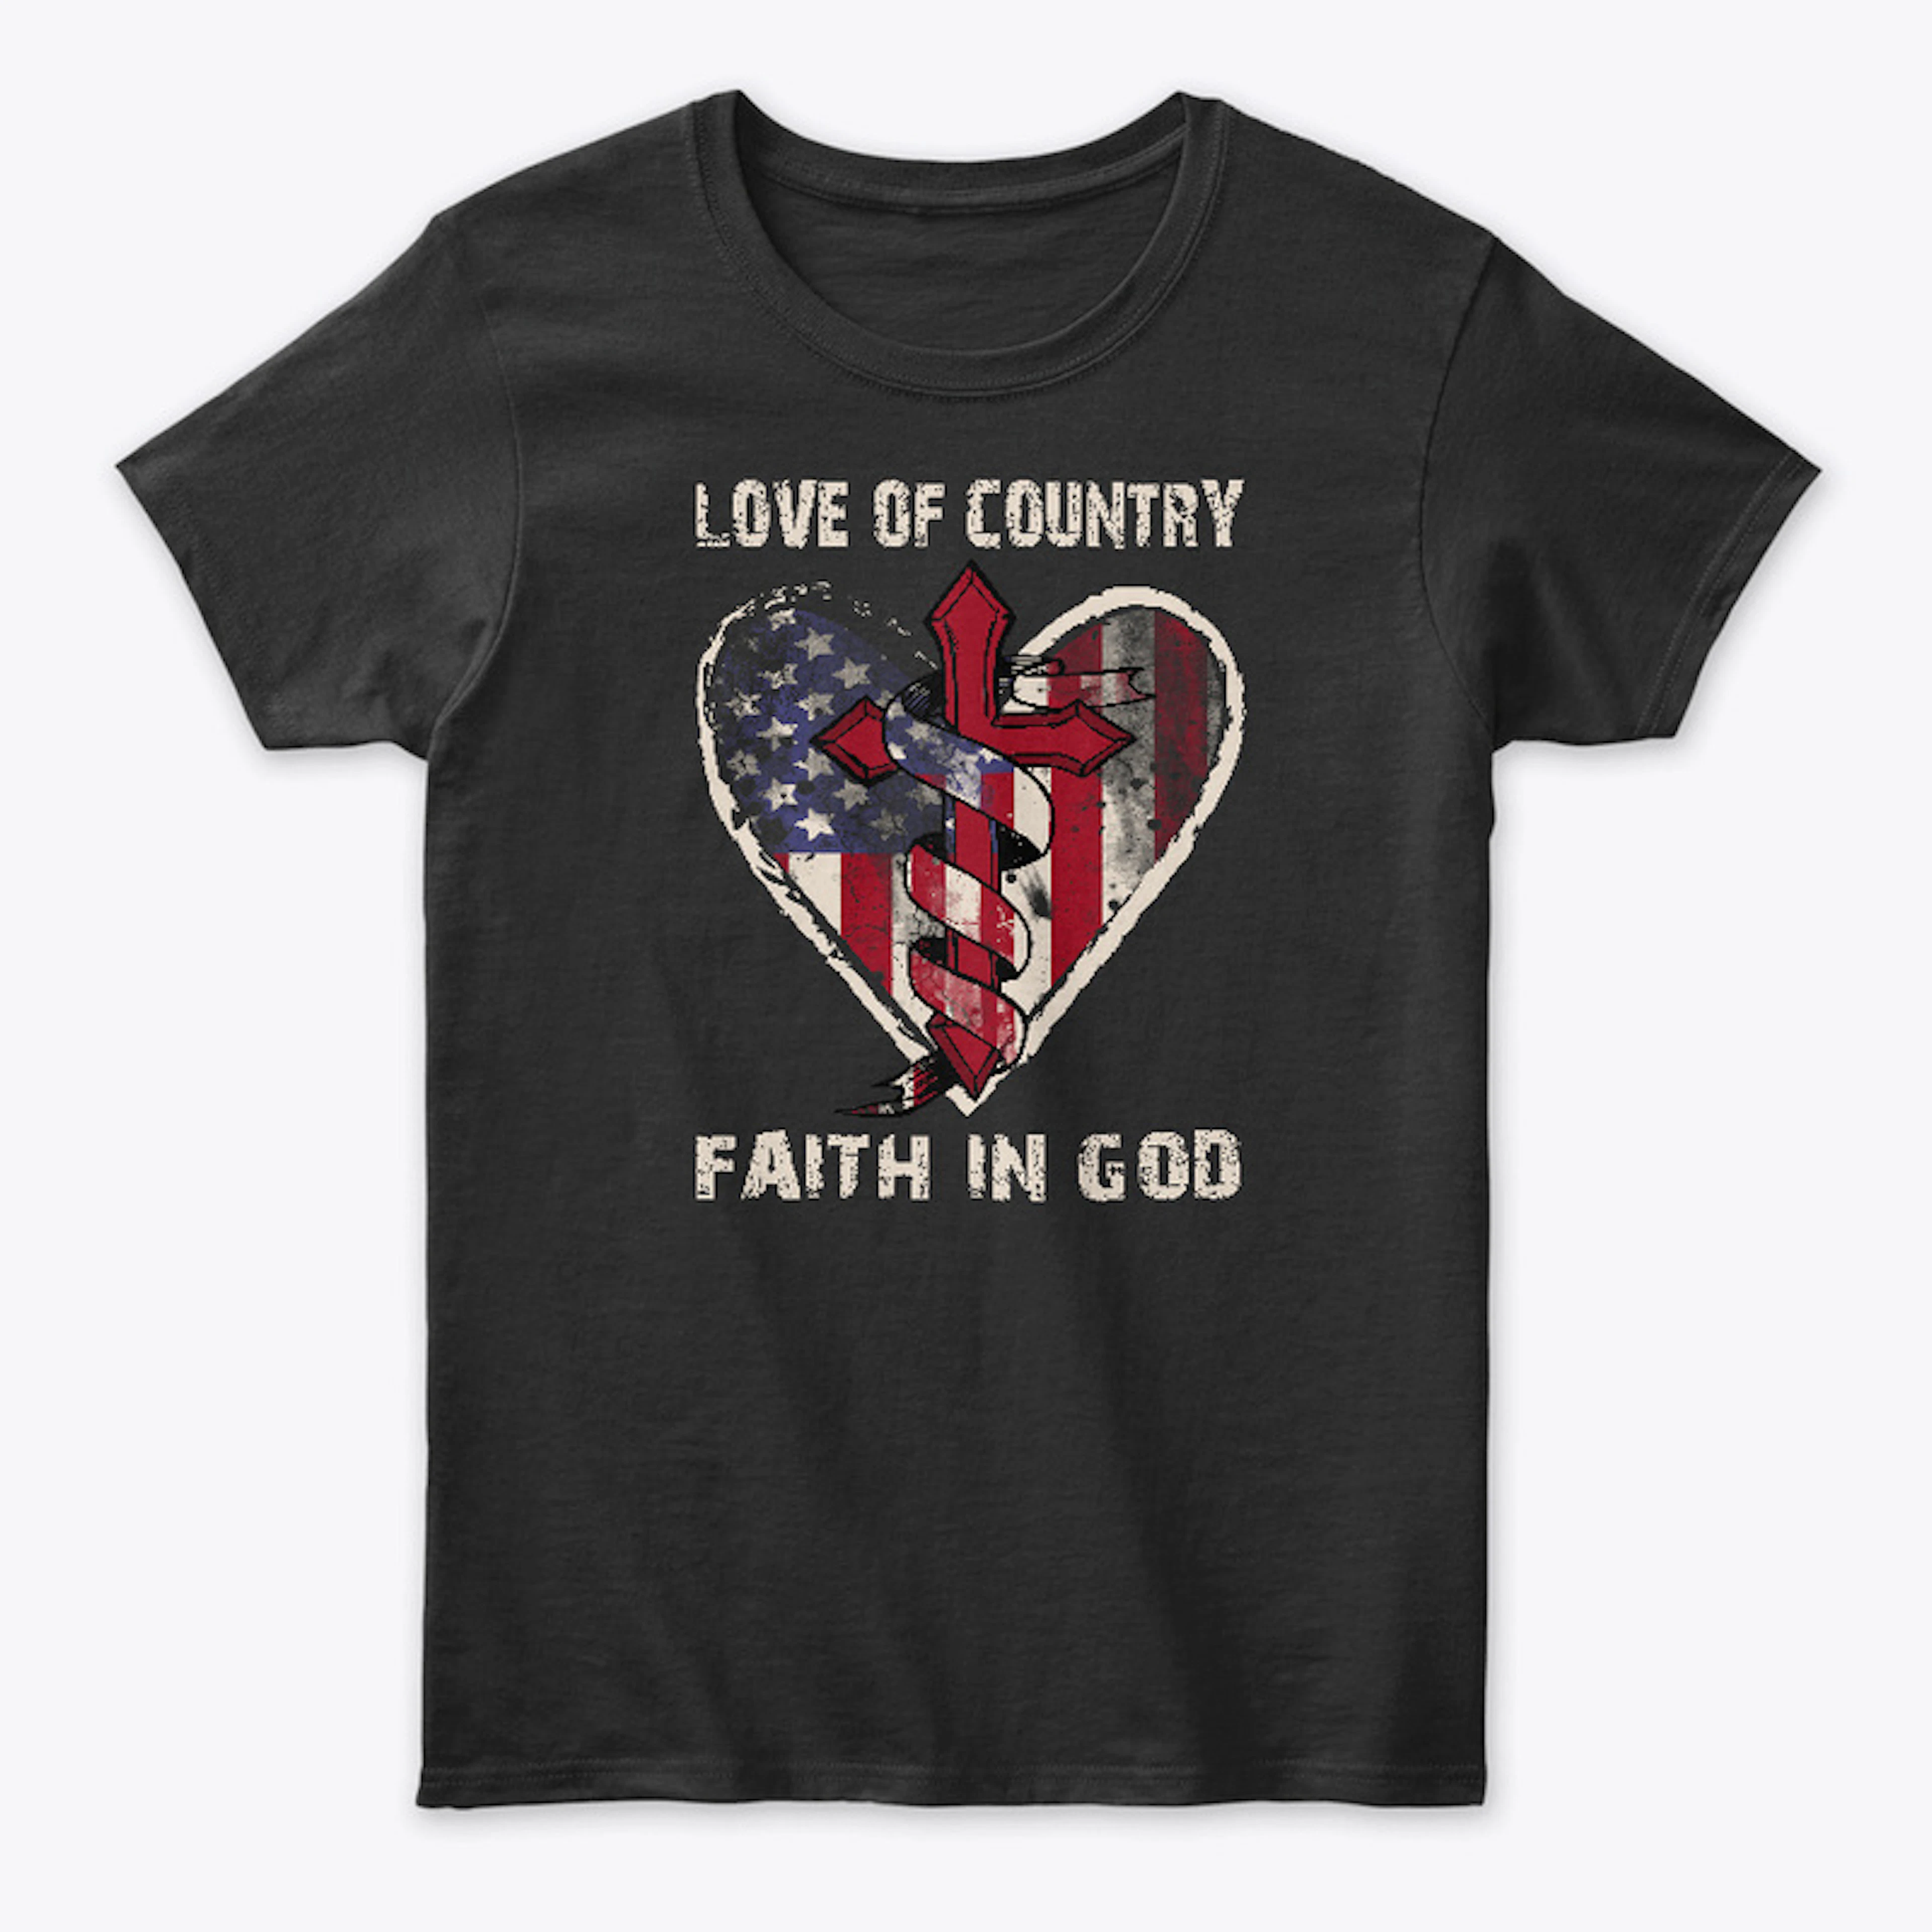 Love of Country Faith in God!